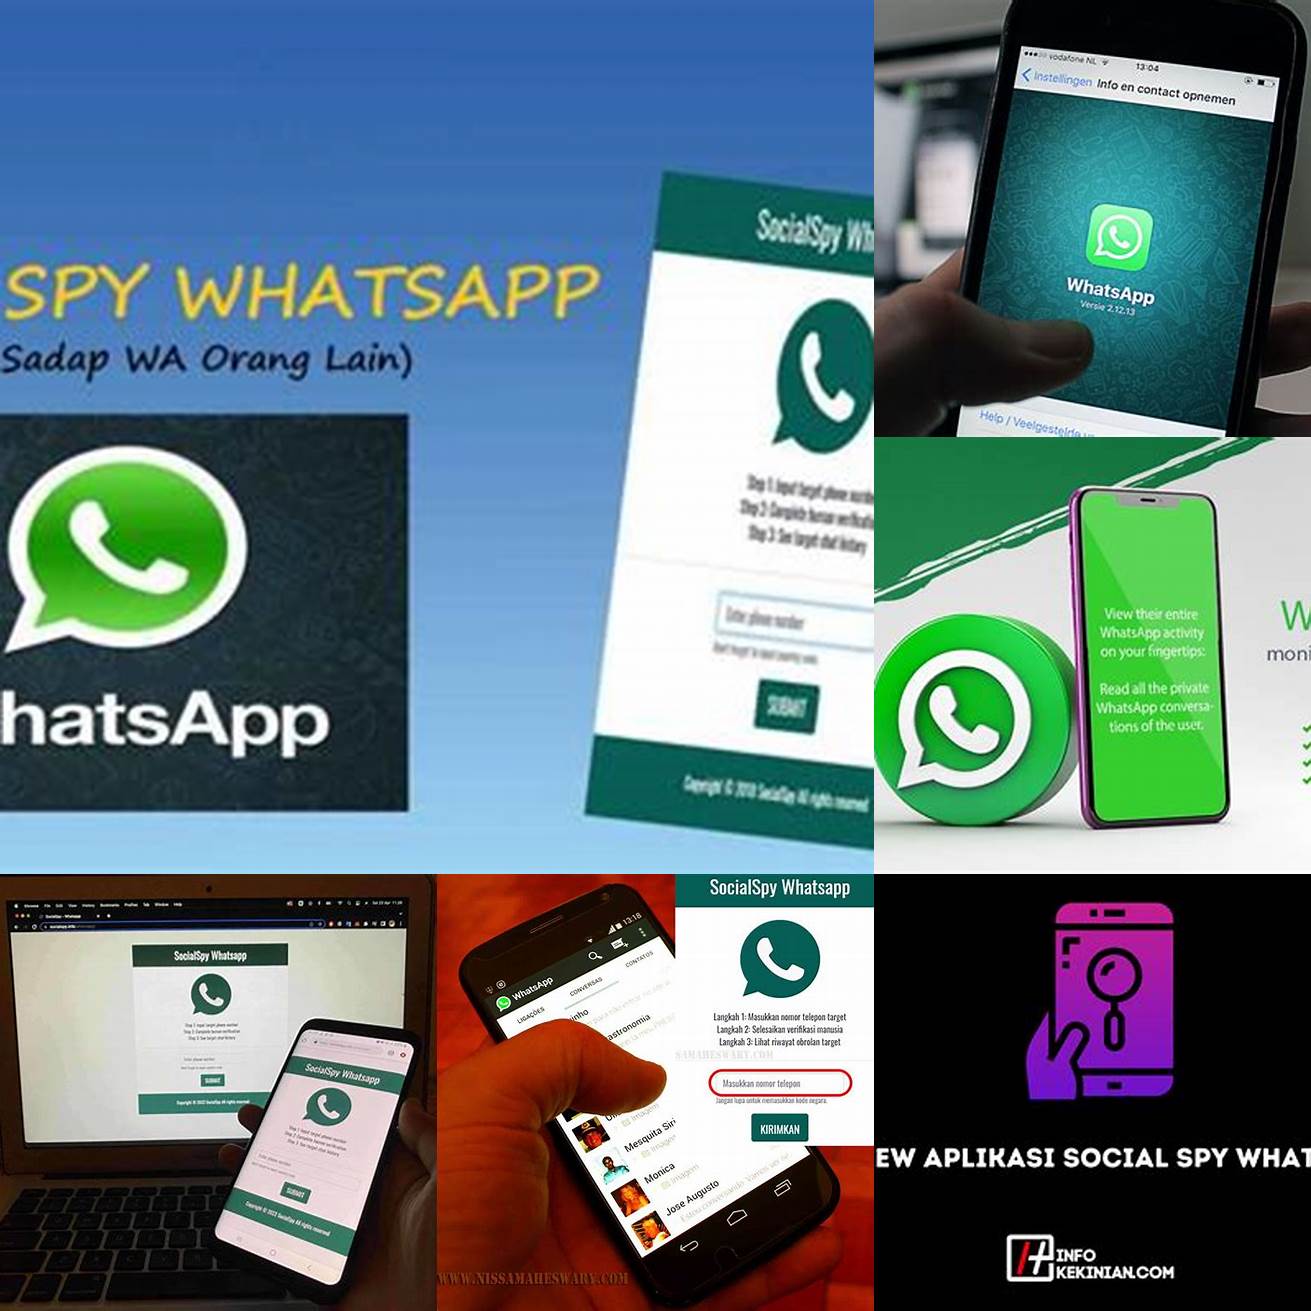 Spy Whatsapp Chat Apk mudah digunakan